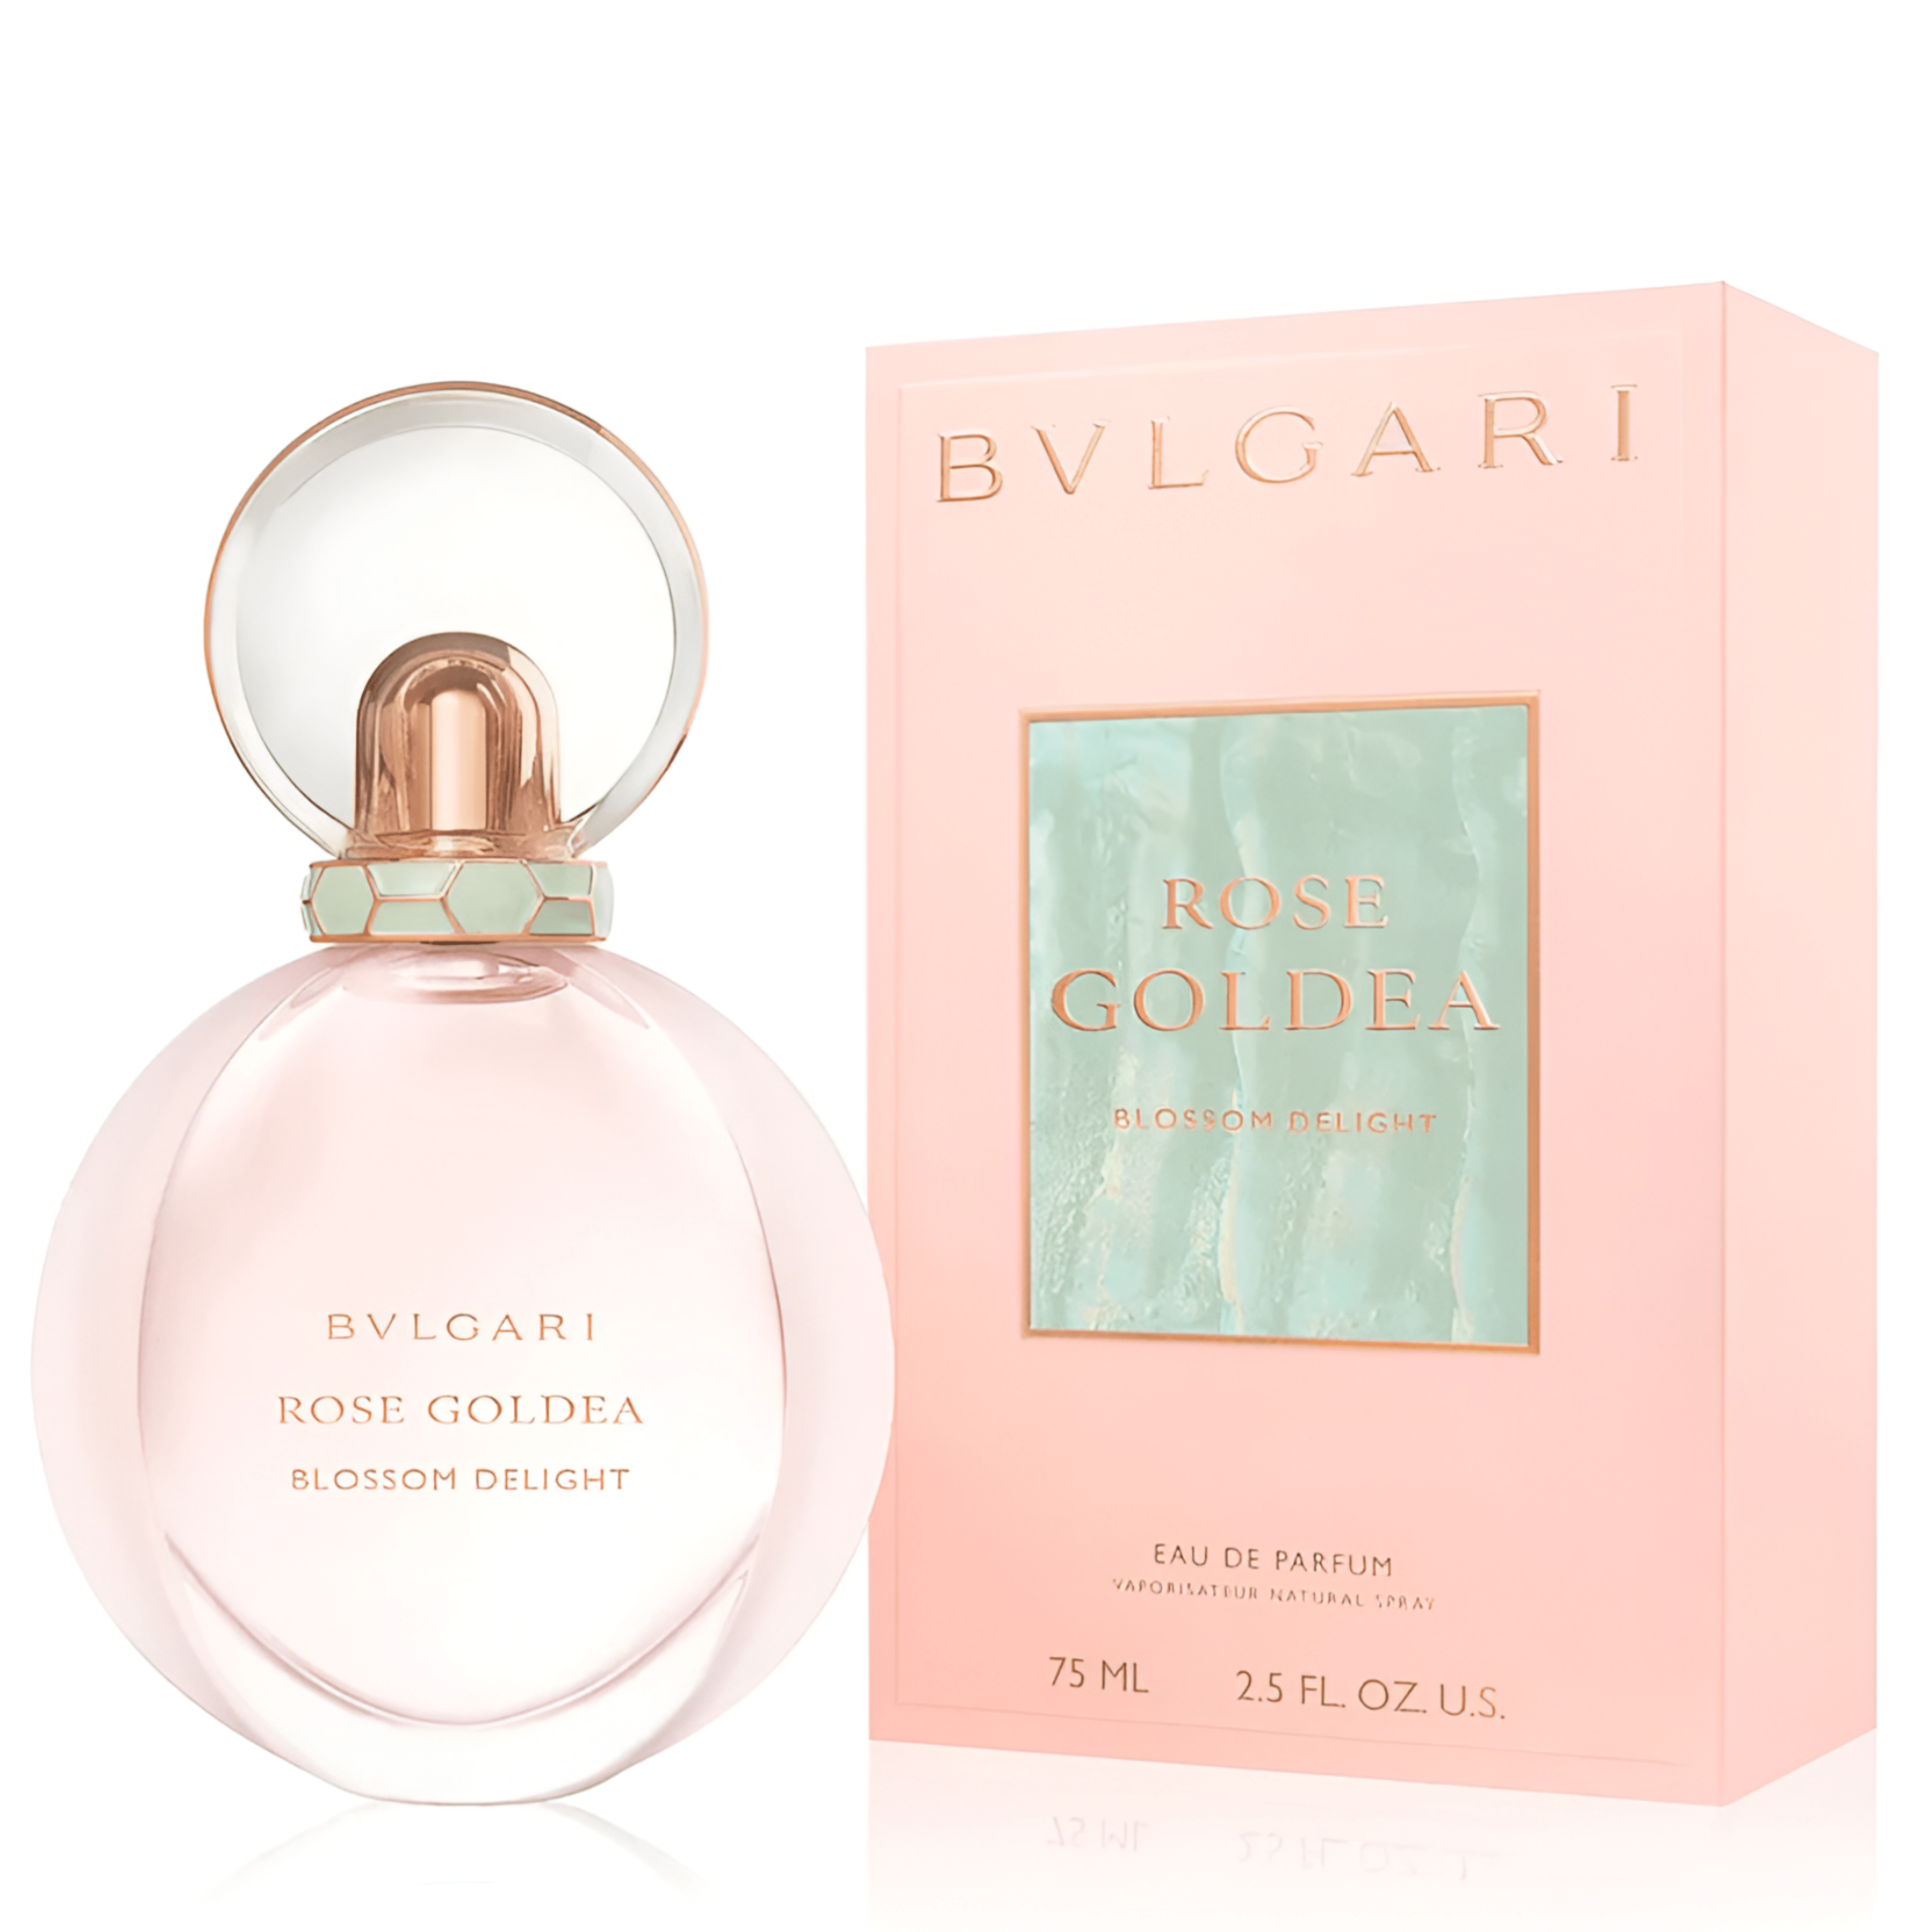 Bvlgari Rose Goldea Blossom Delight EDP | My Perfume Shop Australia